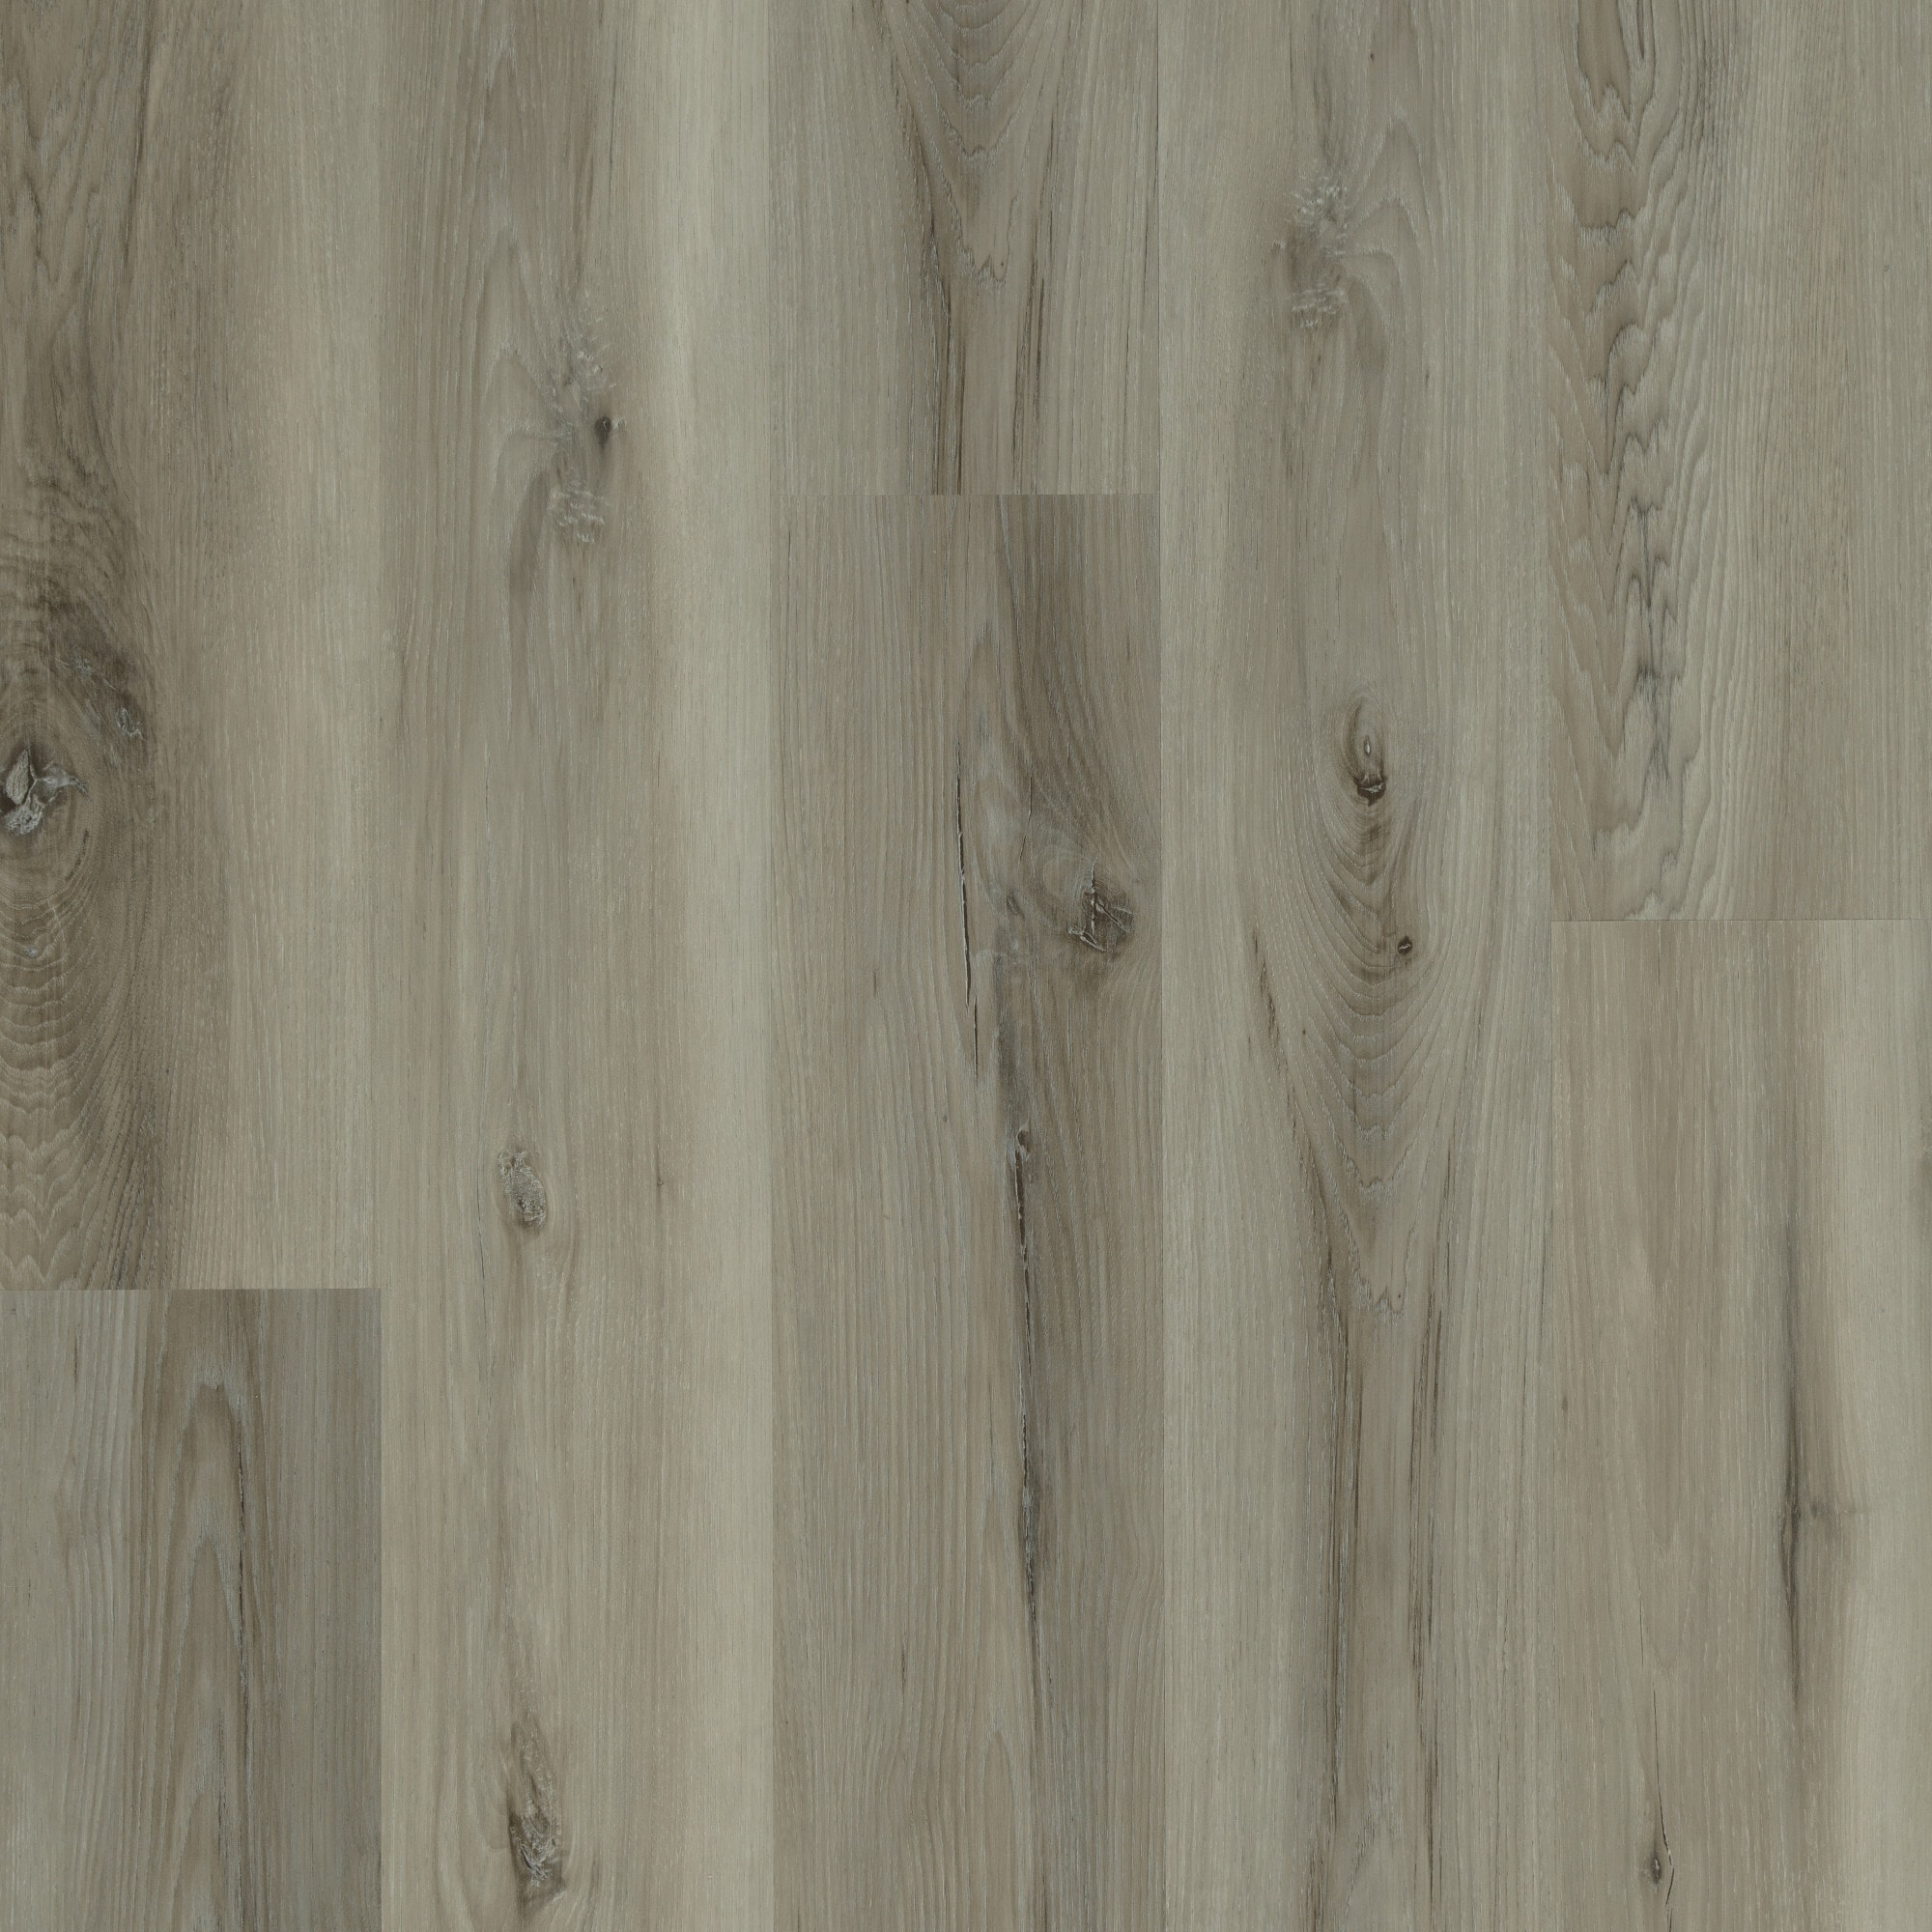 Oak White Self Adhesive PVC Floor Planks Tiles Grey White Beige Brown Oak 5 m² per Pack